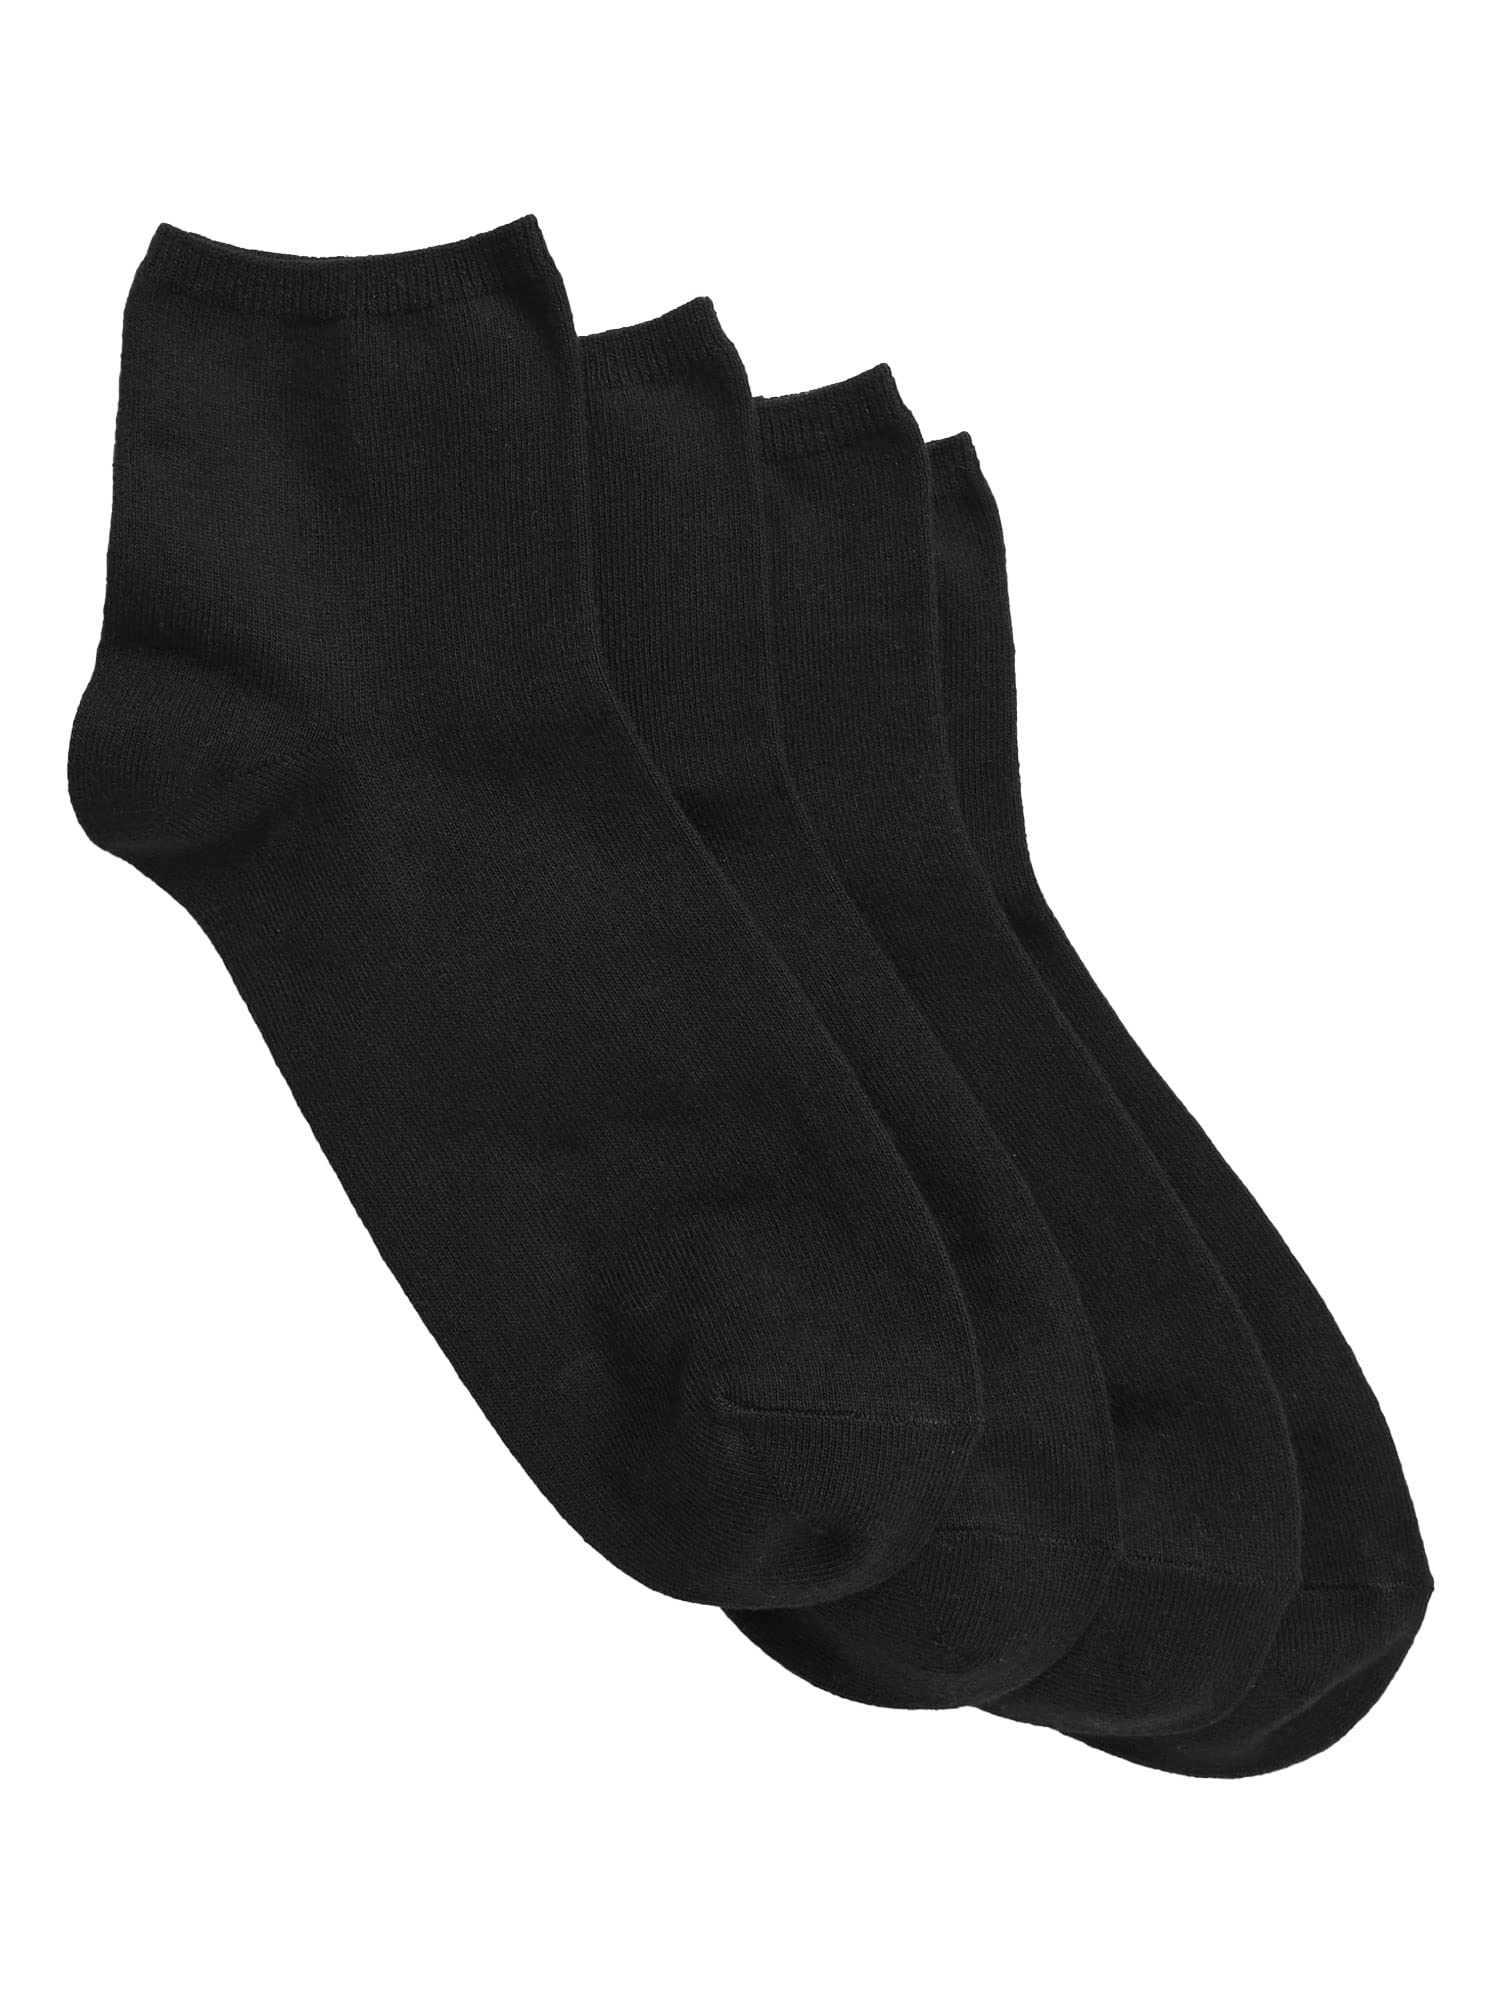 2-Pack GAP Women's Crew Socks (True Black) $3.50 + Free Shipping w/ Prime or on $25+